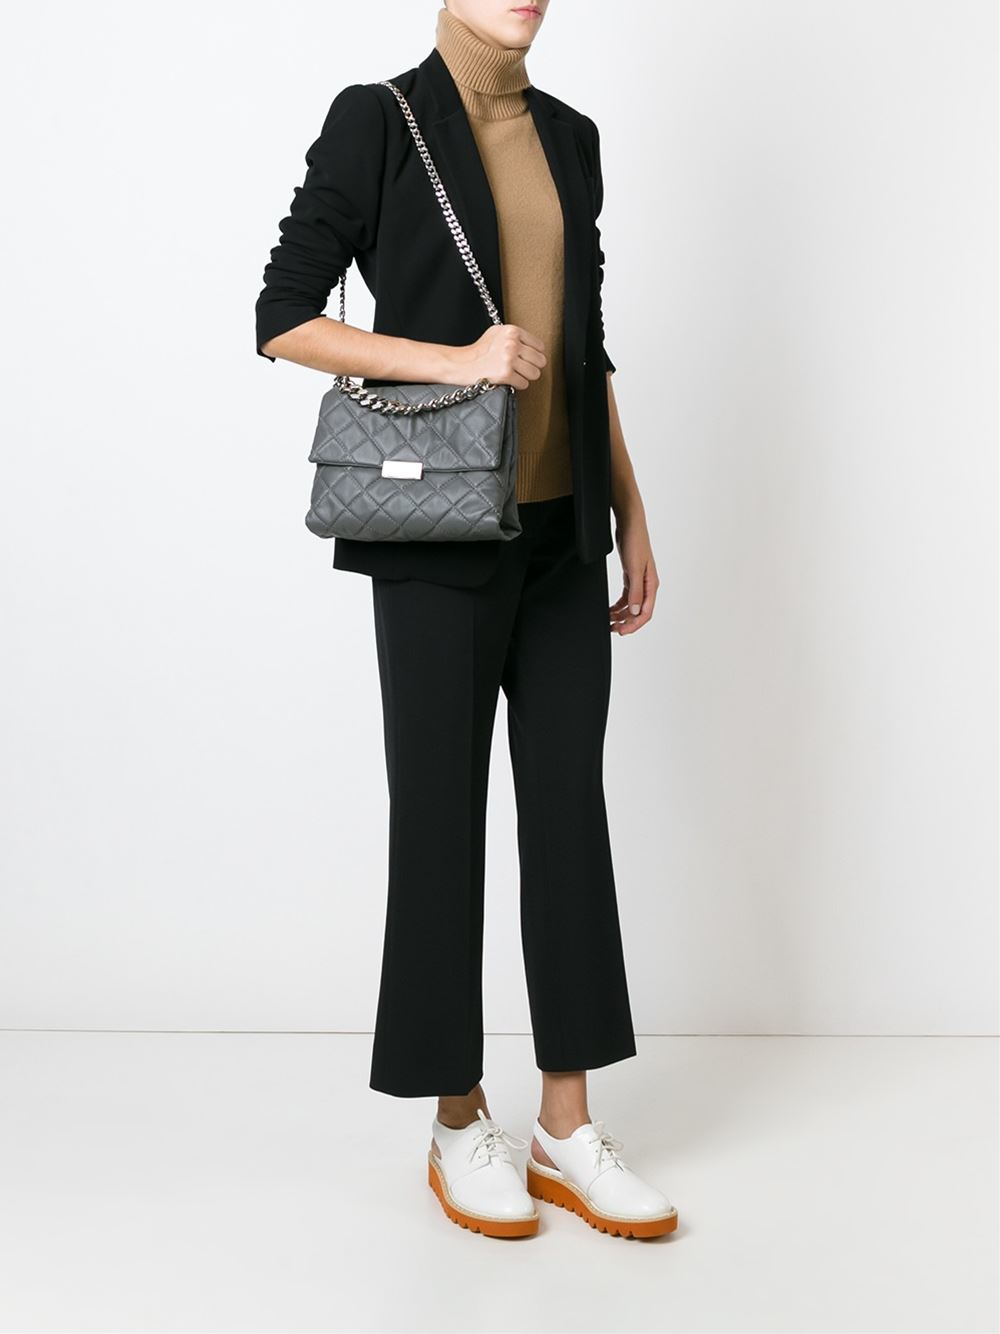 Stella McCartney Small Beckett Shoulder Bag in Gray - Lyst